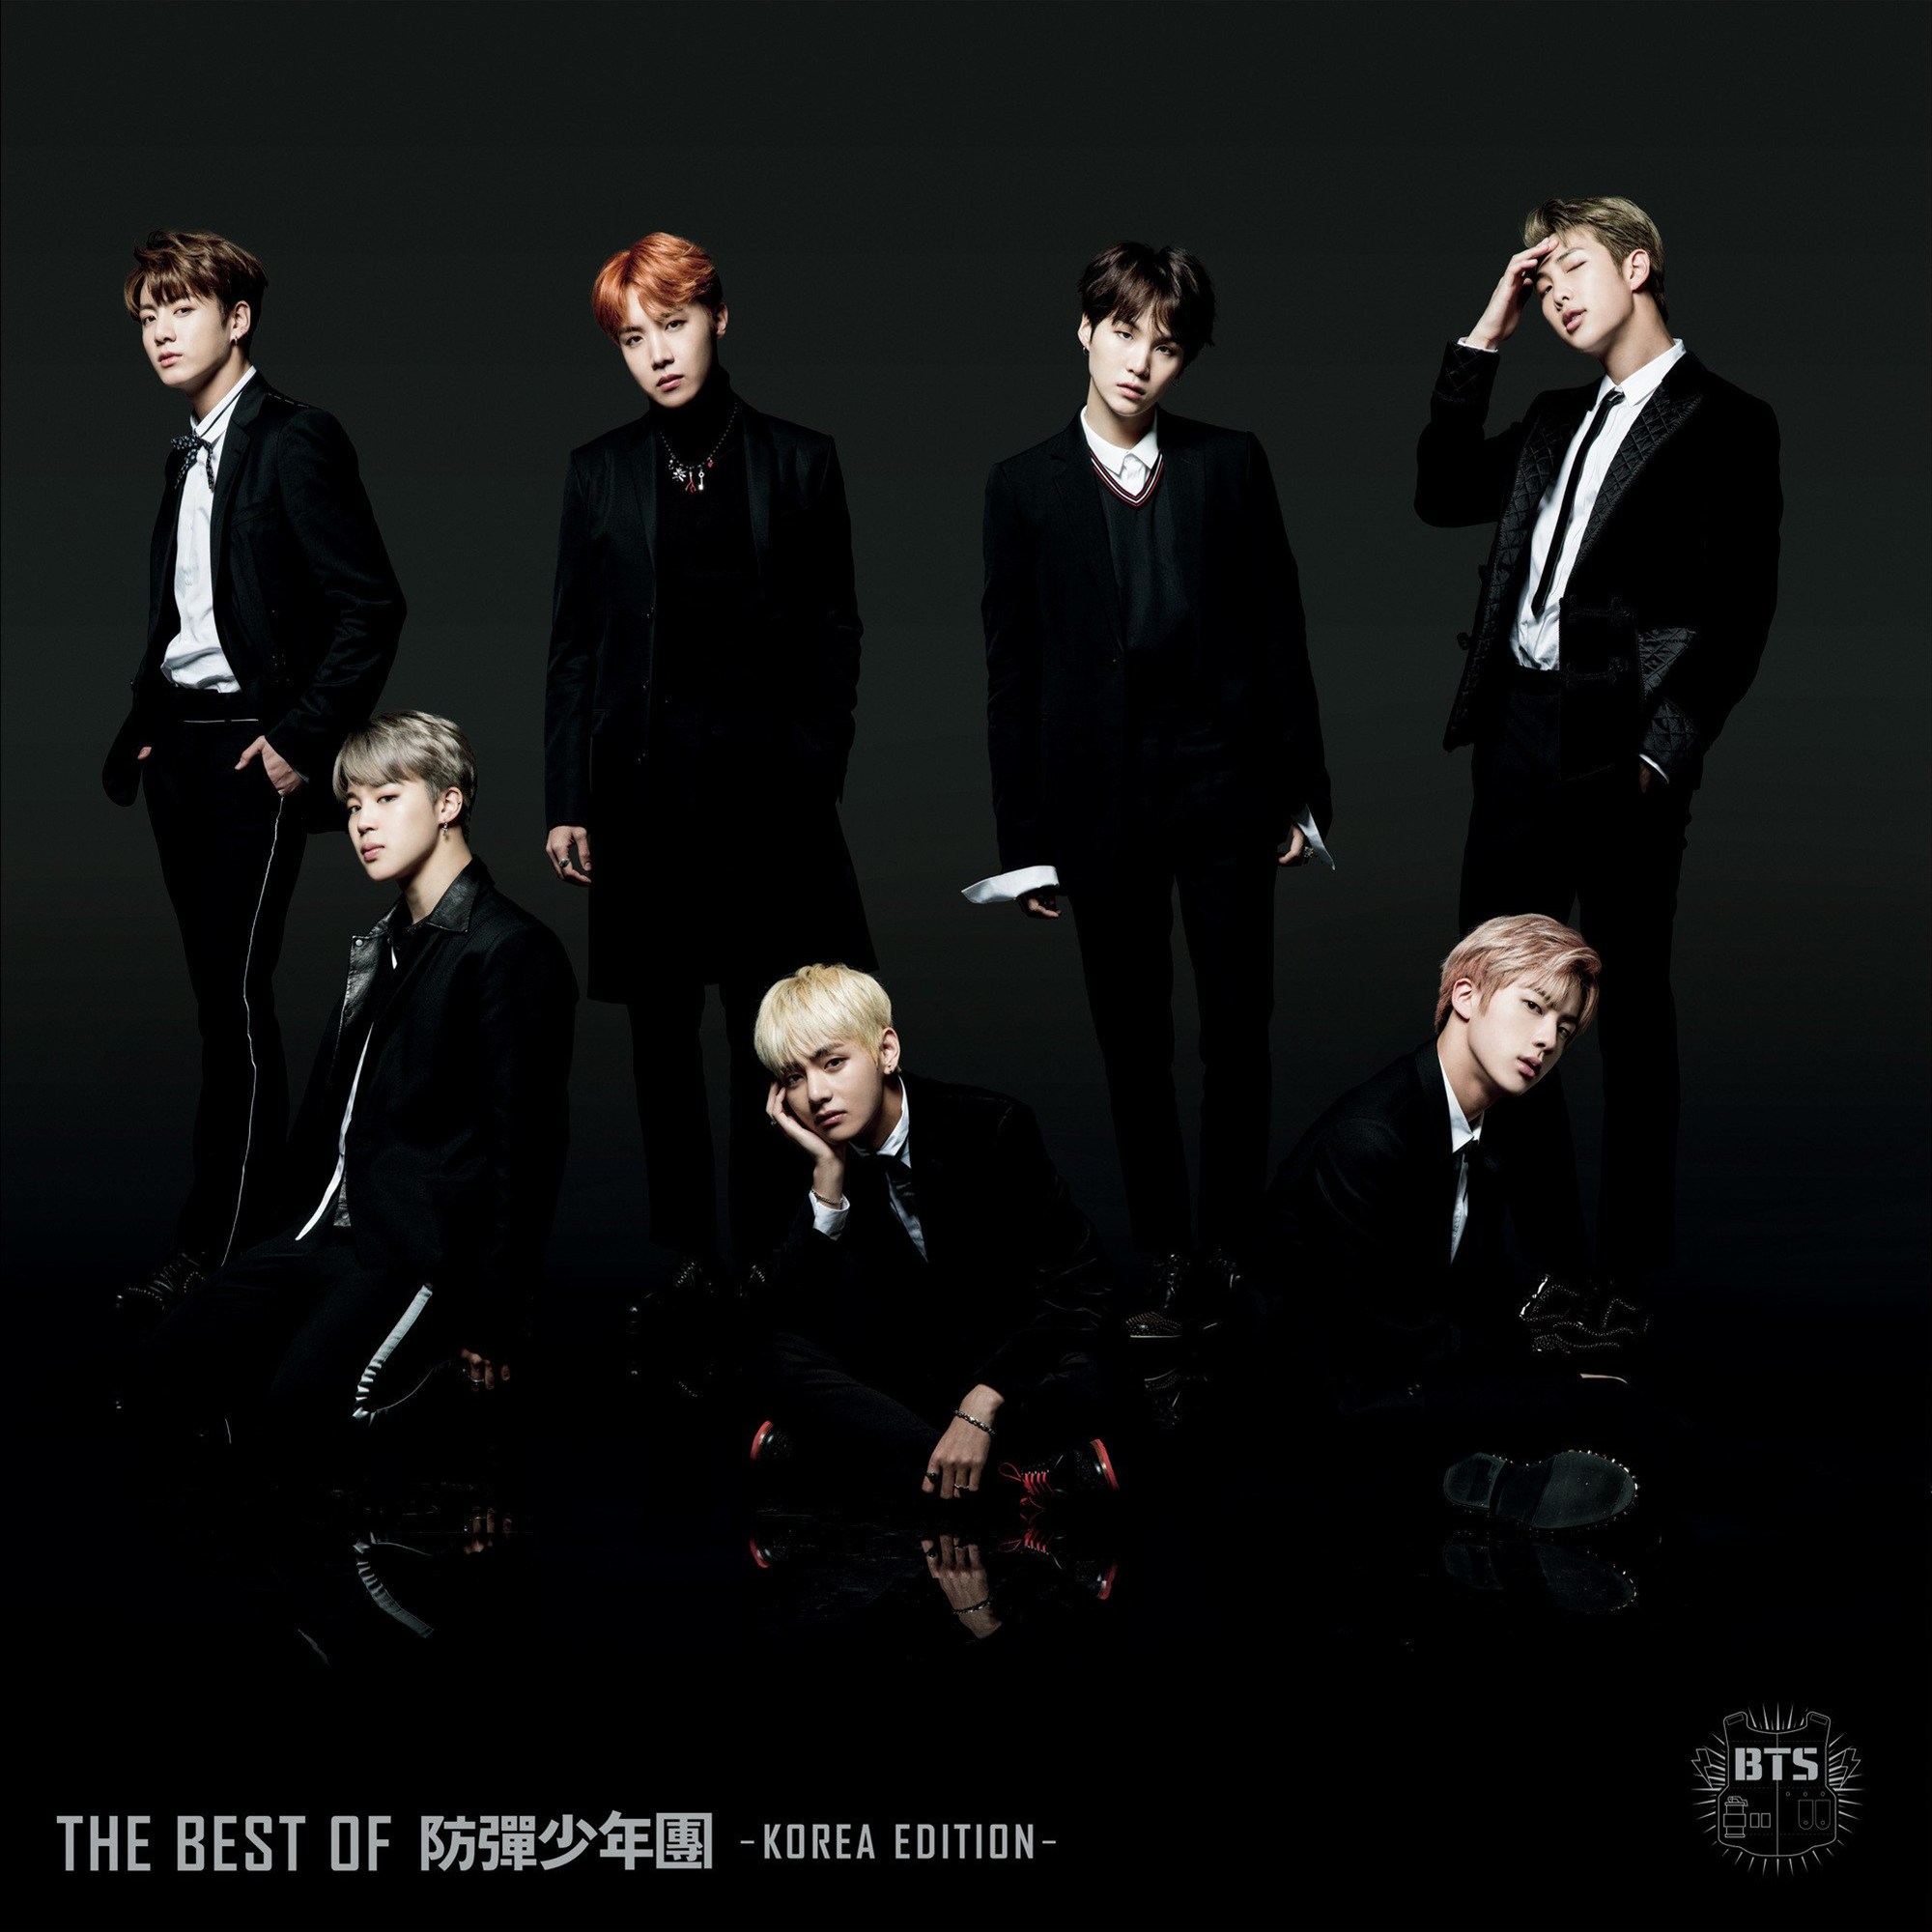 BTS THE BEST OF 防彈少年團-KOREA EDITION-K-POP/アジア - K-POP/アジア